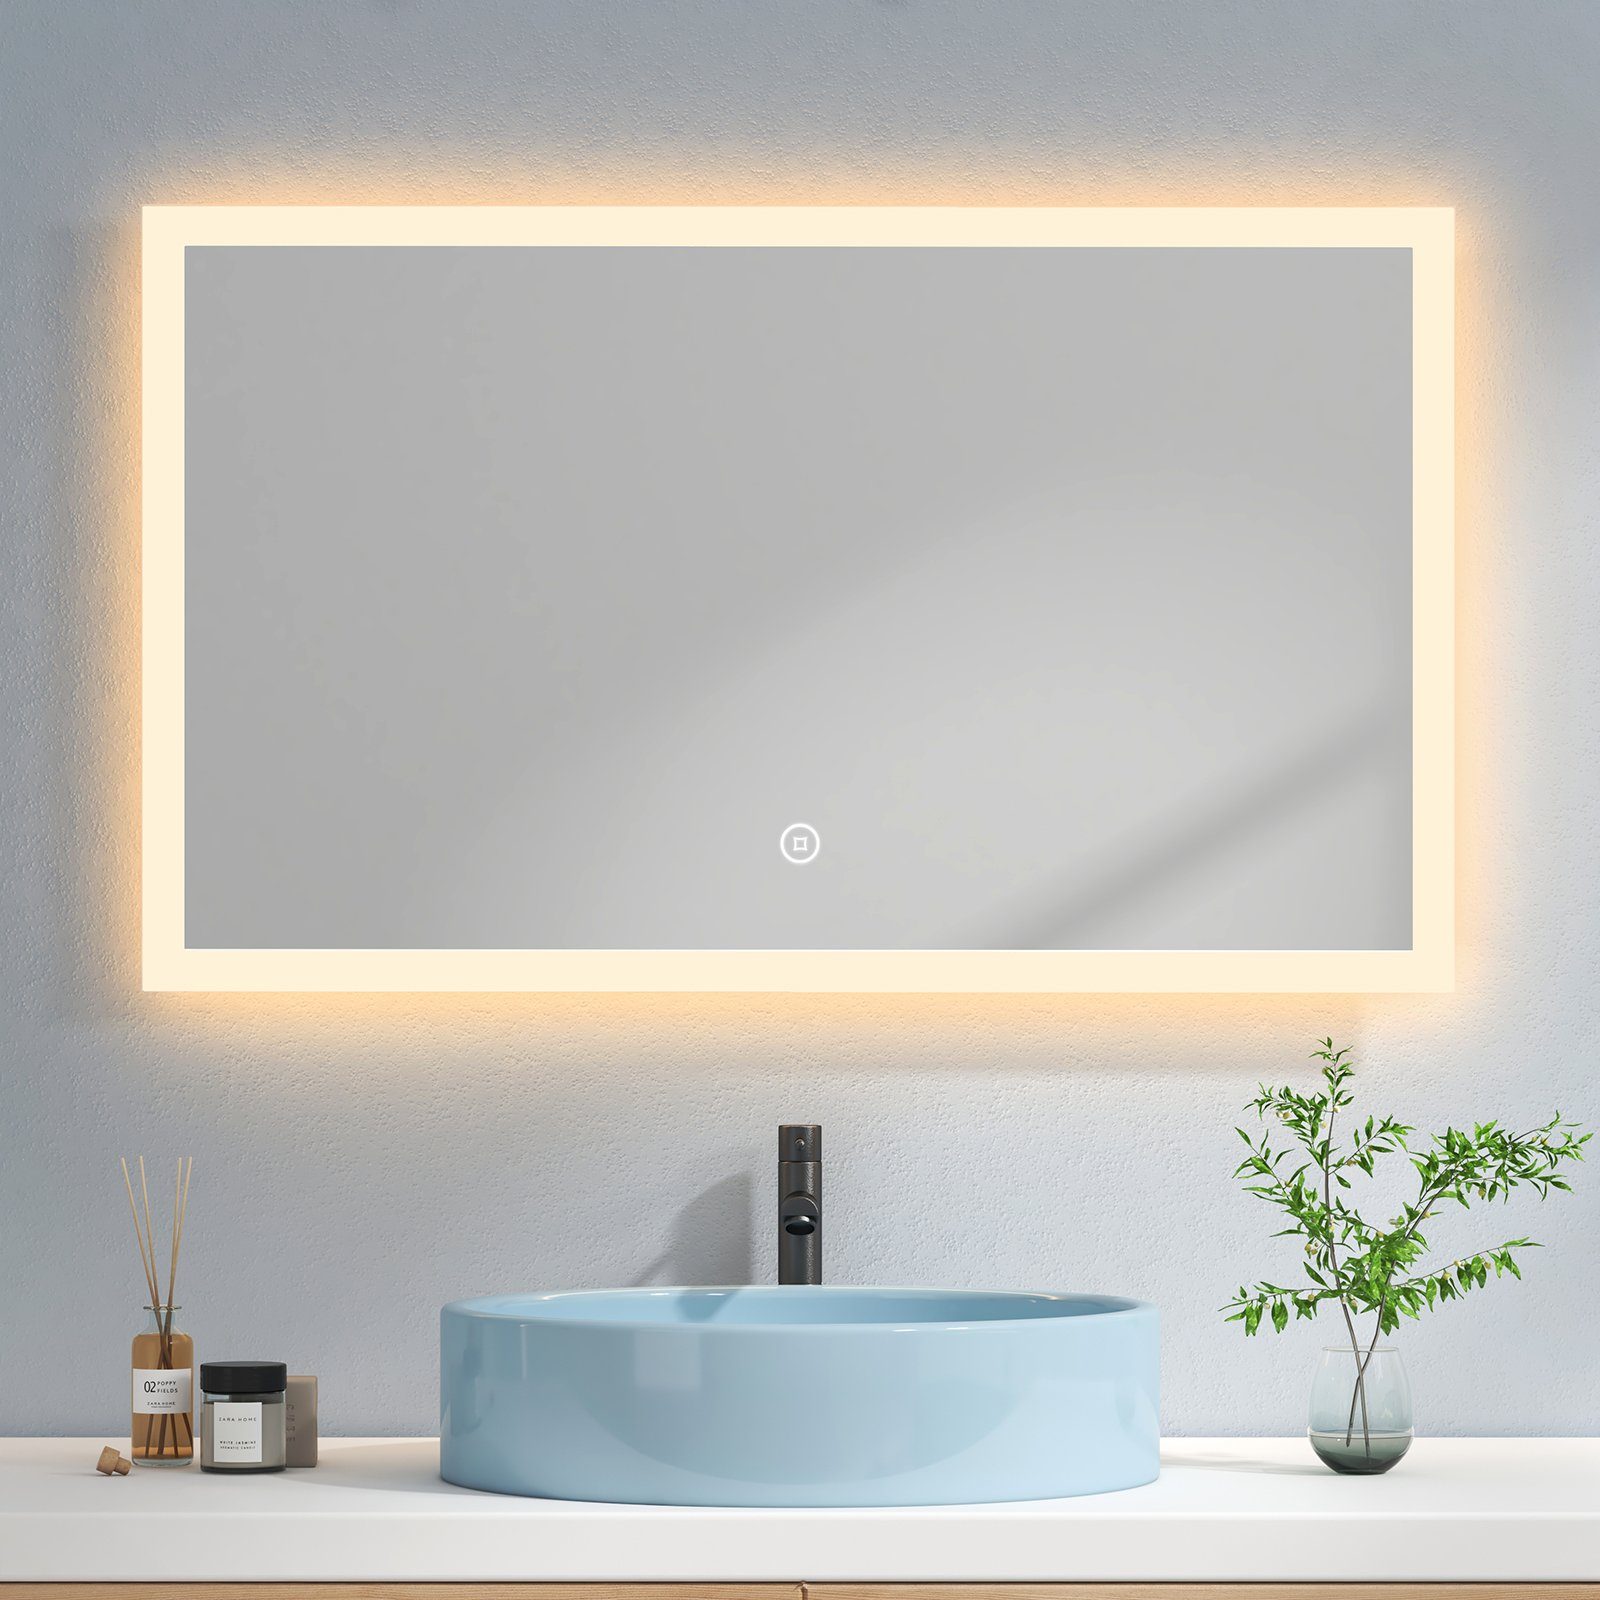 Alu LED Beleuchtung Kalt Warm weiß Licht Bad Badezimmer spiegel dimmbar 40 x 60 